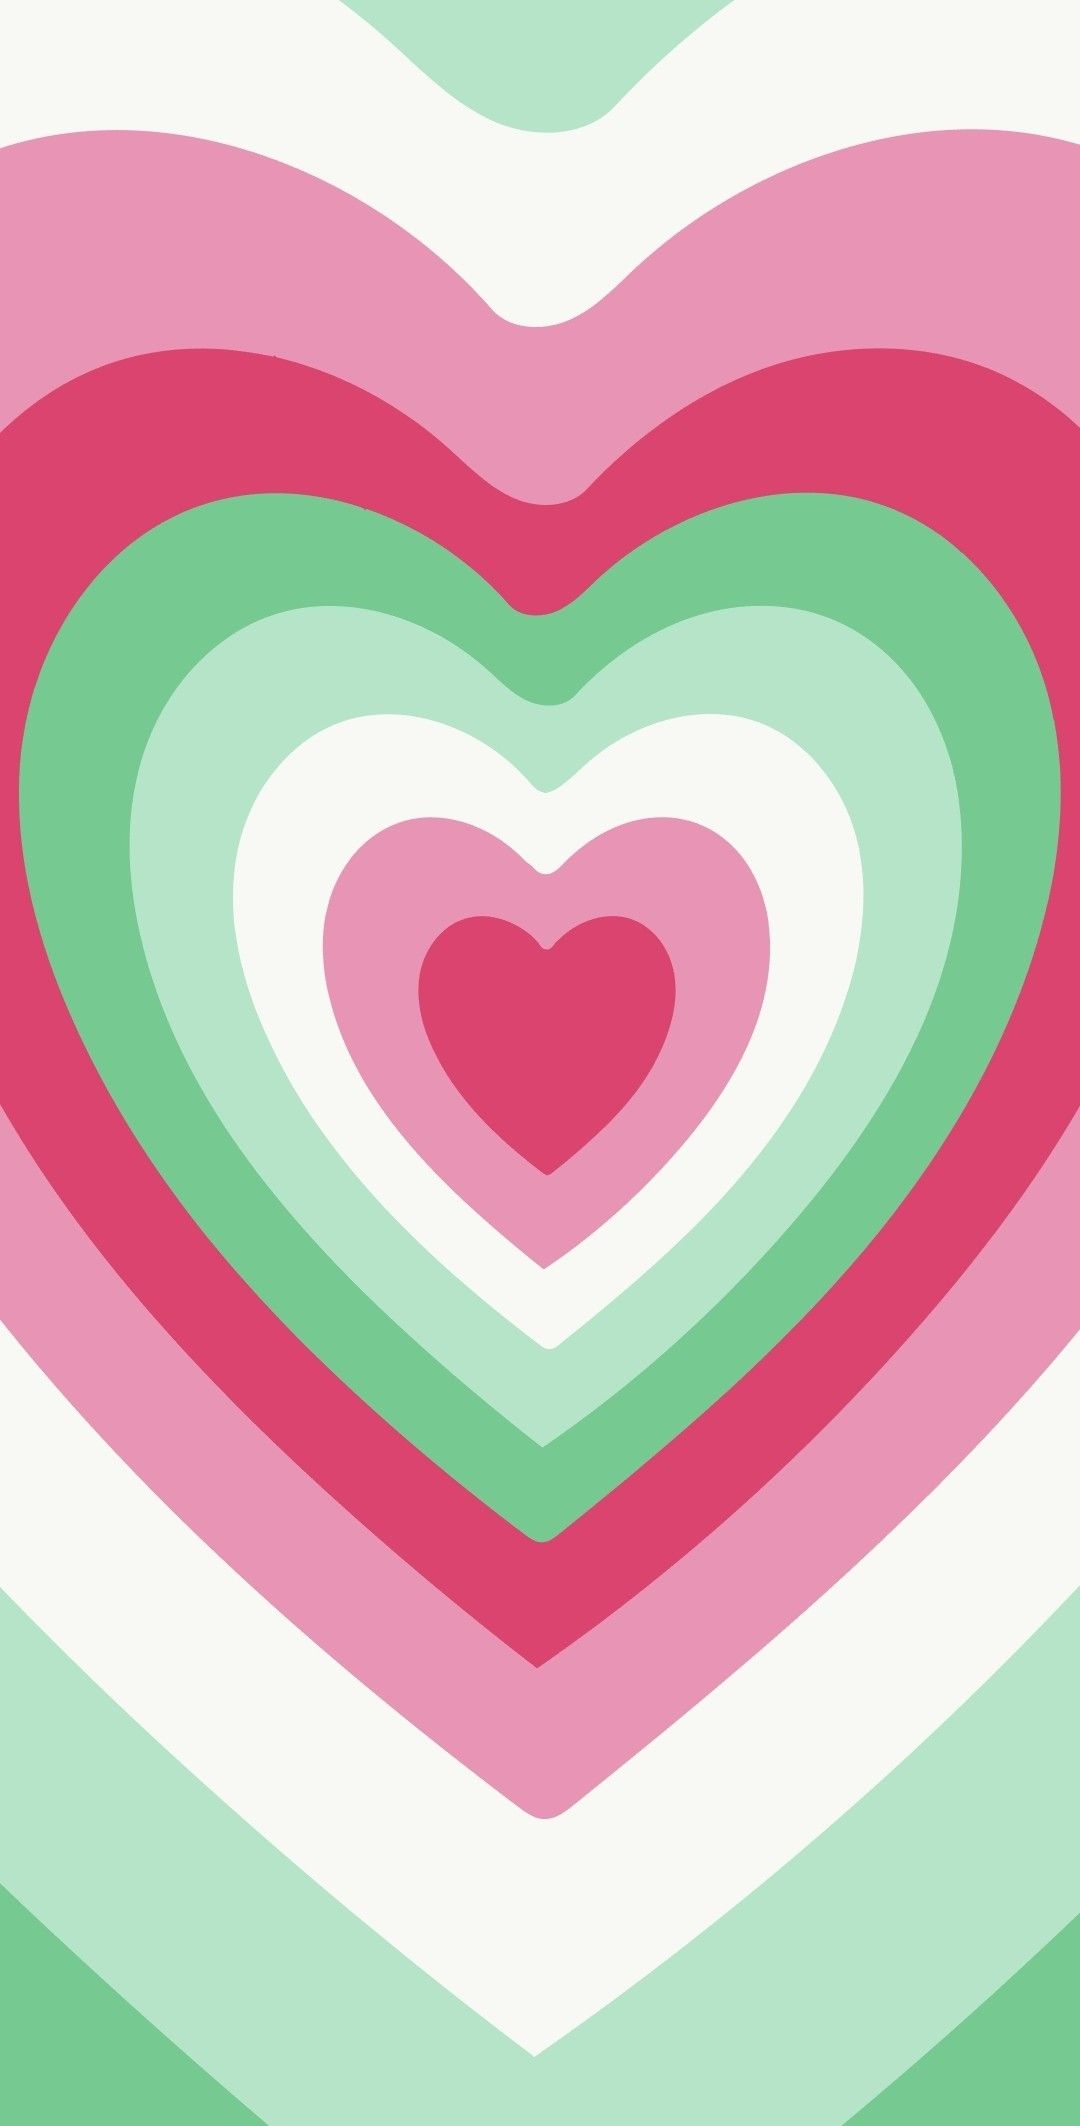 Free Green Heart Background - Download in Illustrator, EPS, SVG, JPG |  Template.net